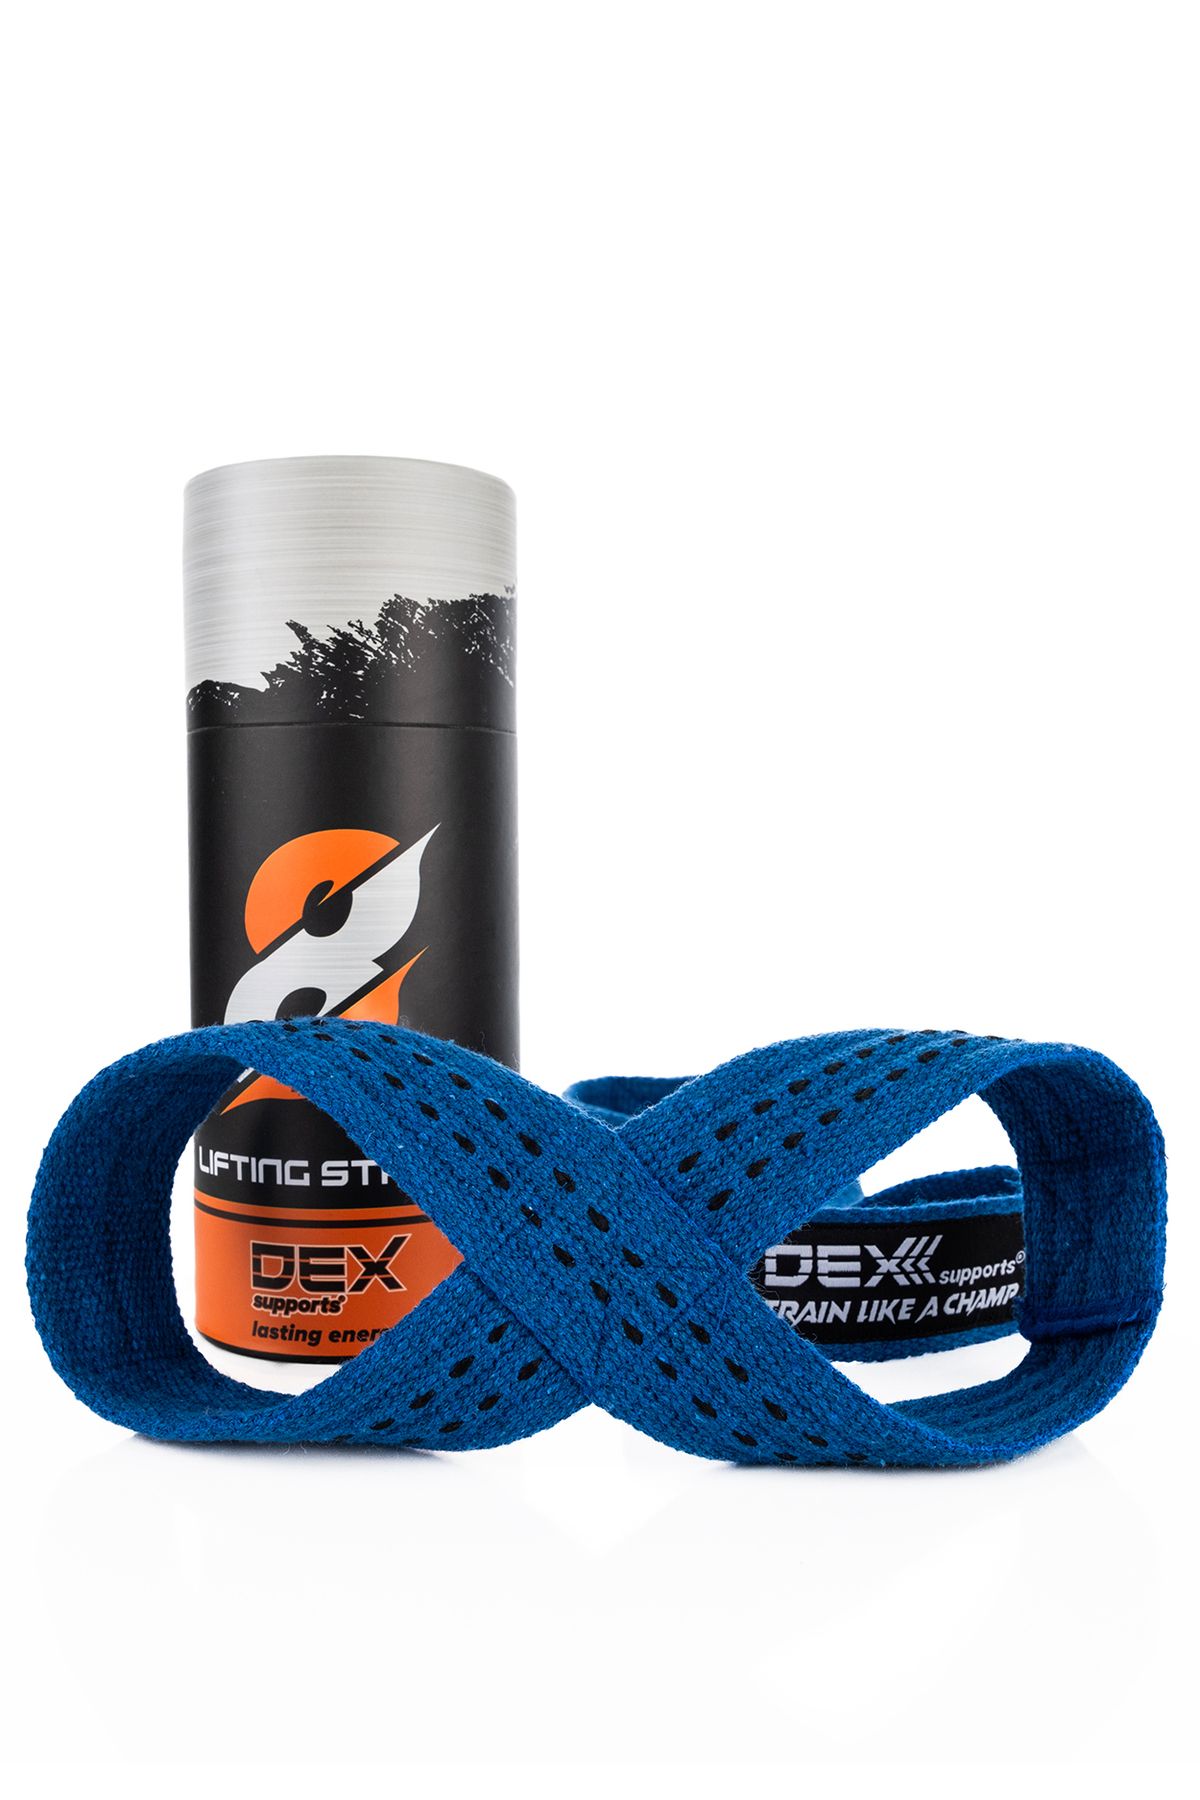 Dex Supports Lasting Energy Figure 8 Loop Lifting Straps Limited Edition 2li Paket